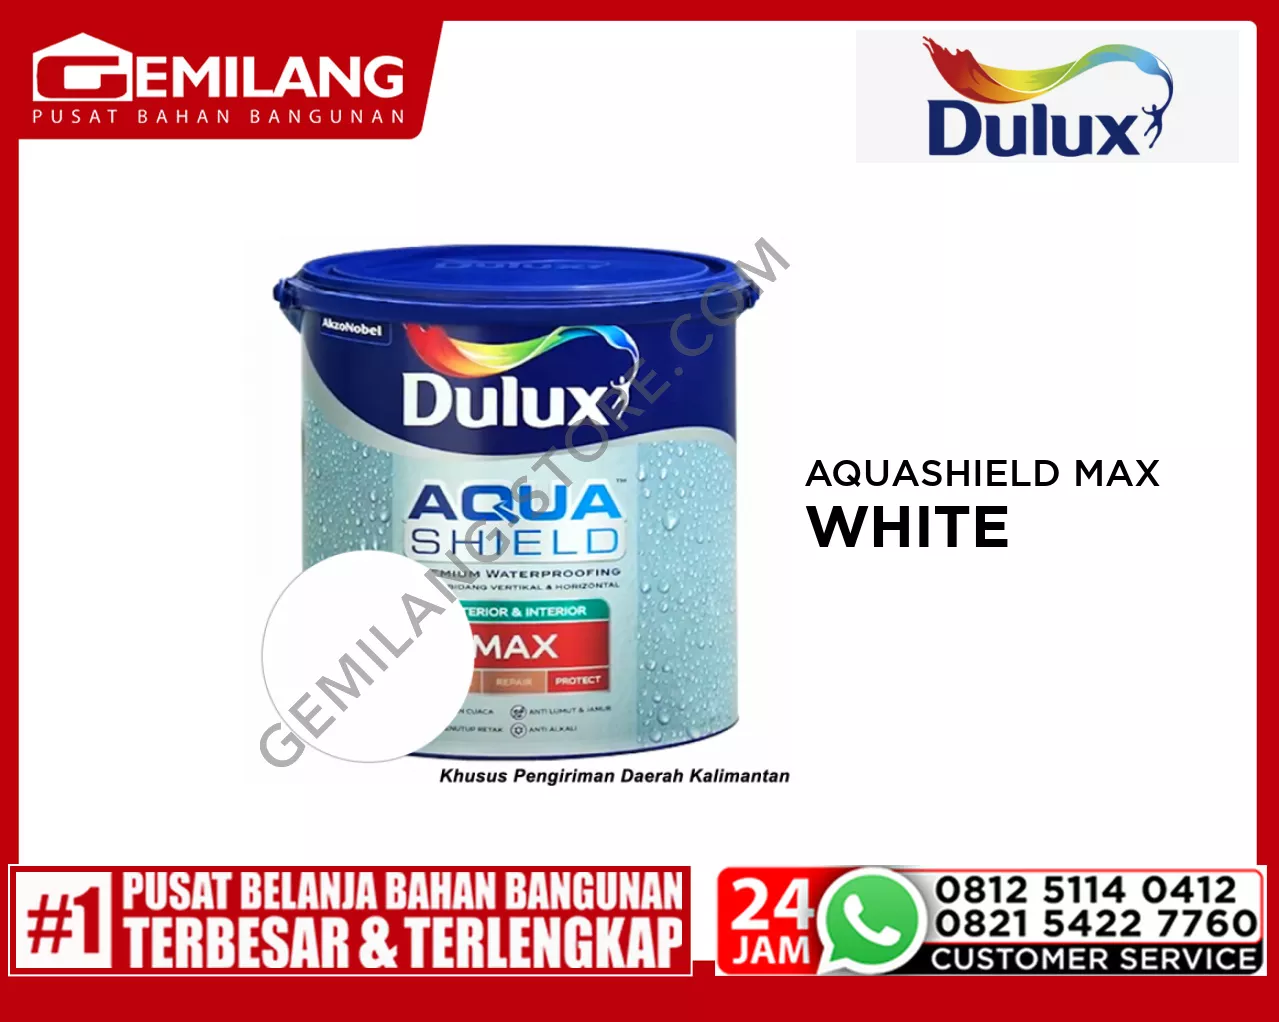 DULUX AQUASHIELD MAX WHITE 99 44875 20kg